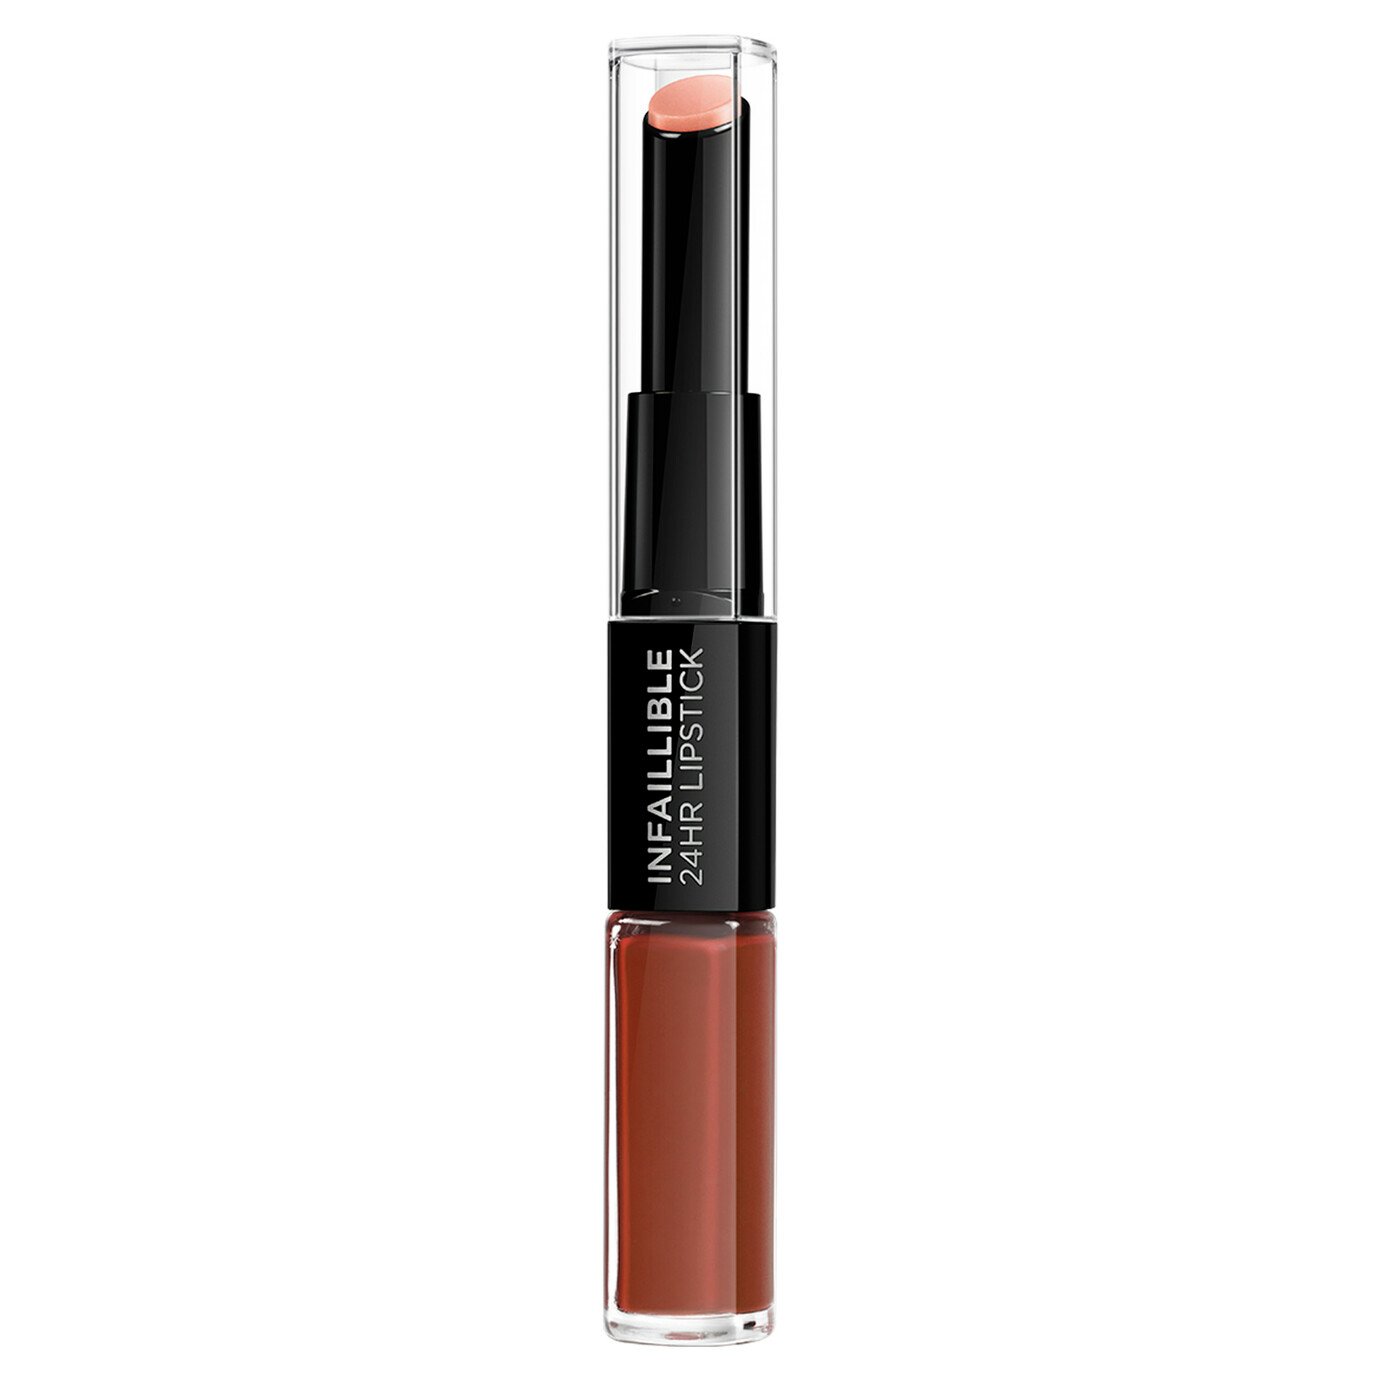 L'Oreal Paris Infallible 24HR Lipstick - Perpetual Brown